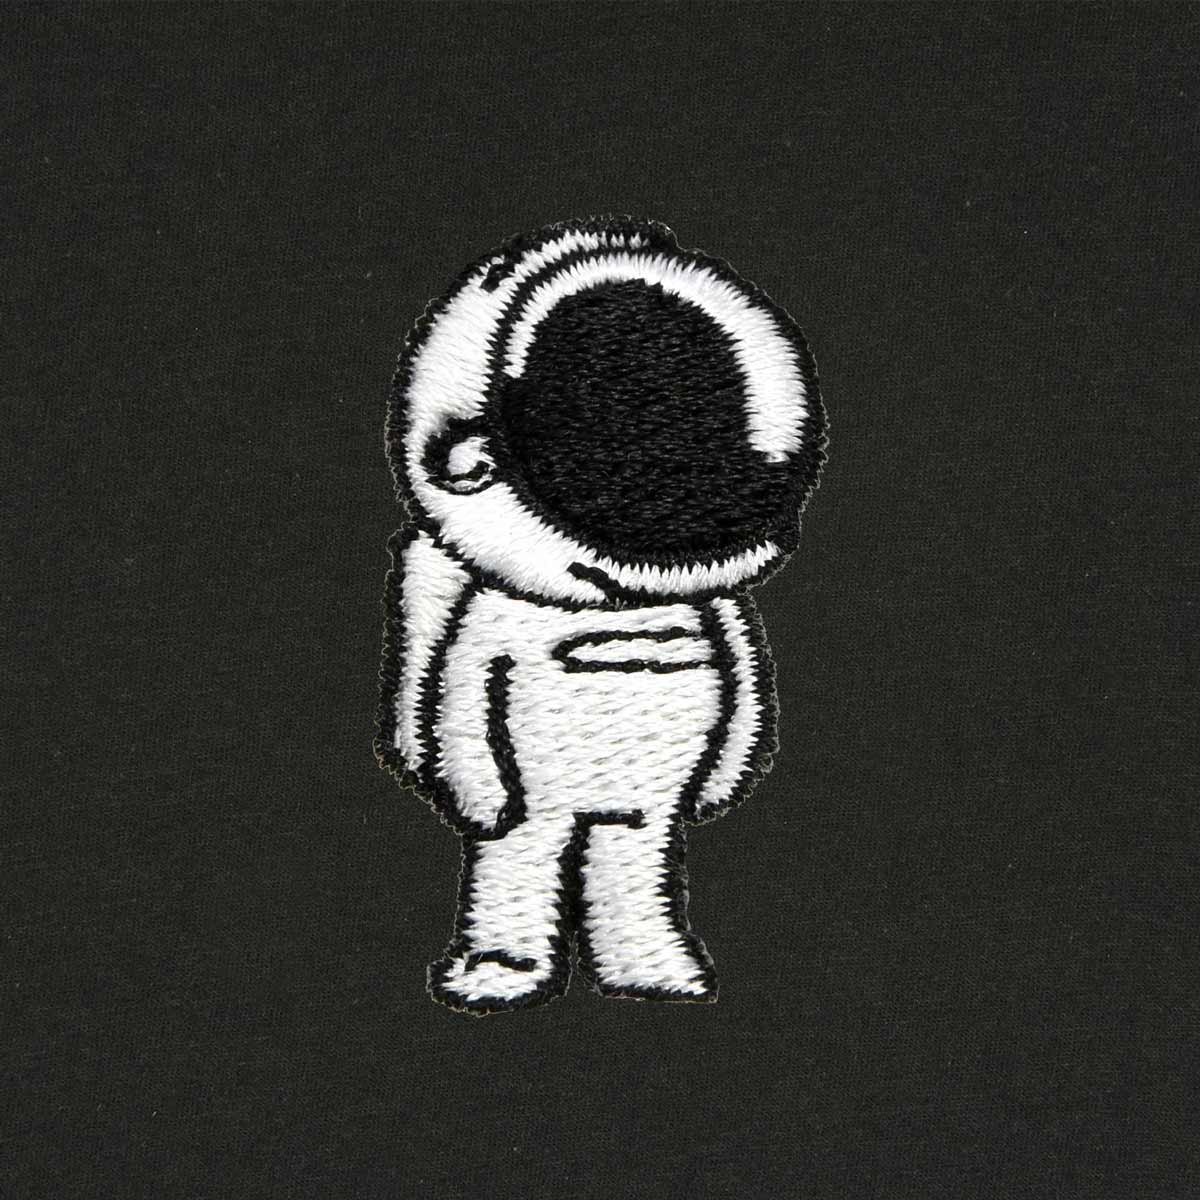 Dalix Astronaut T-Shirt